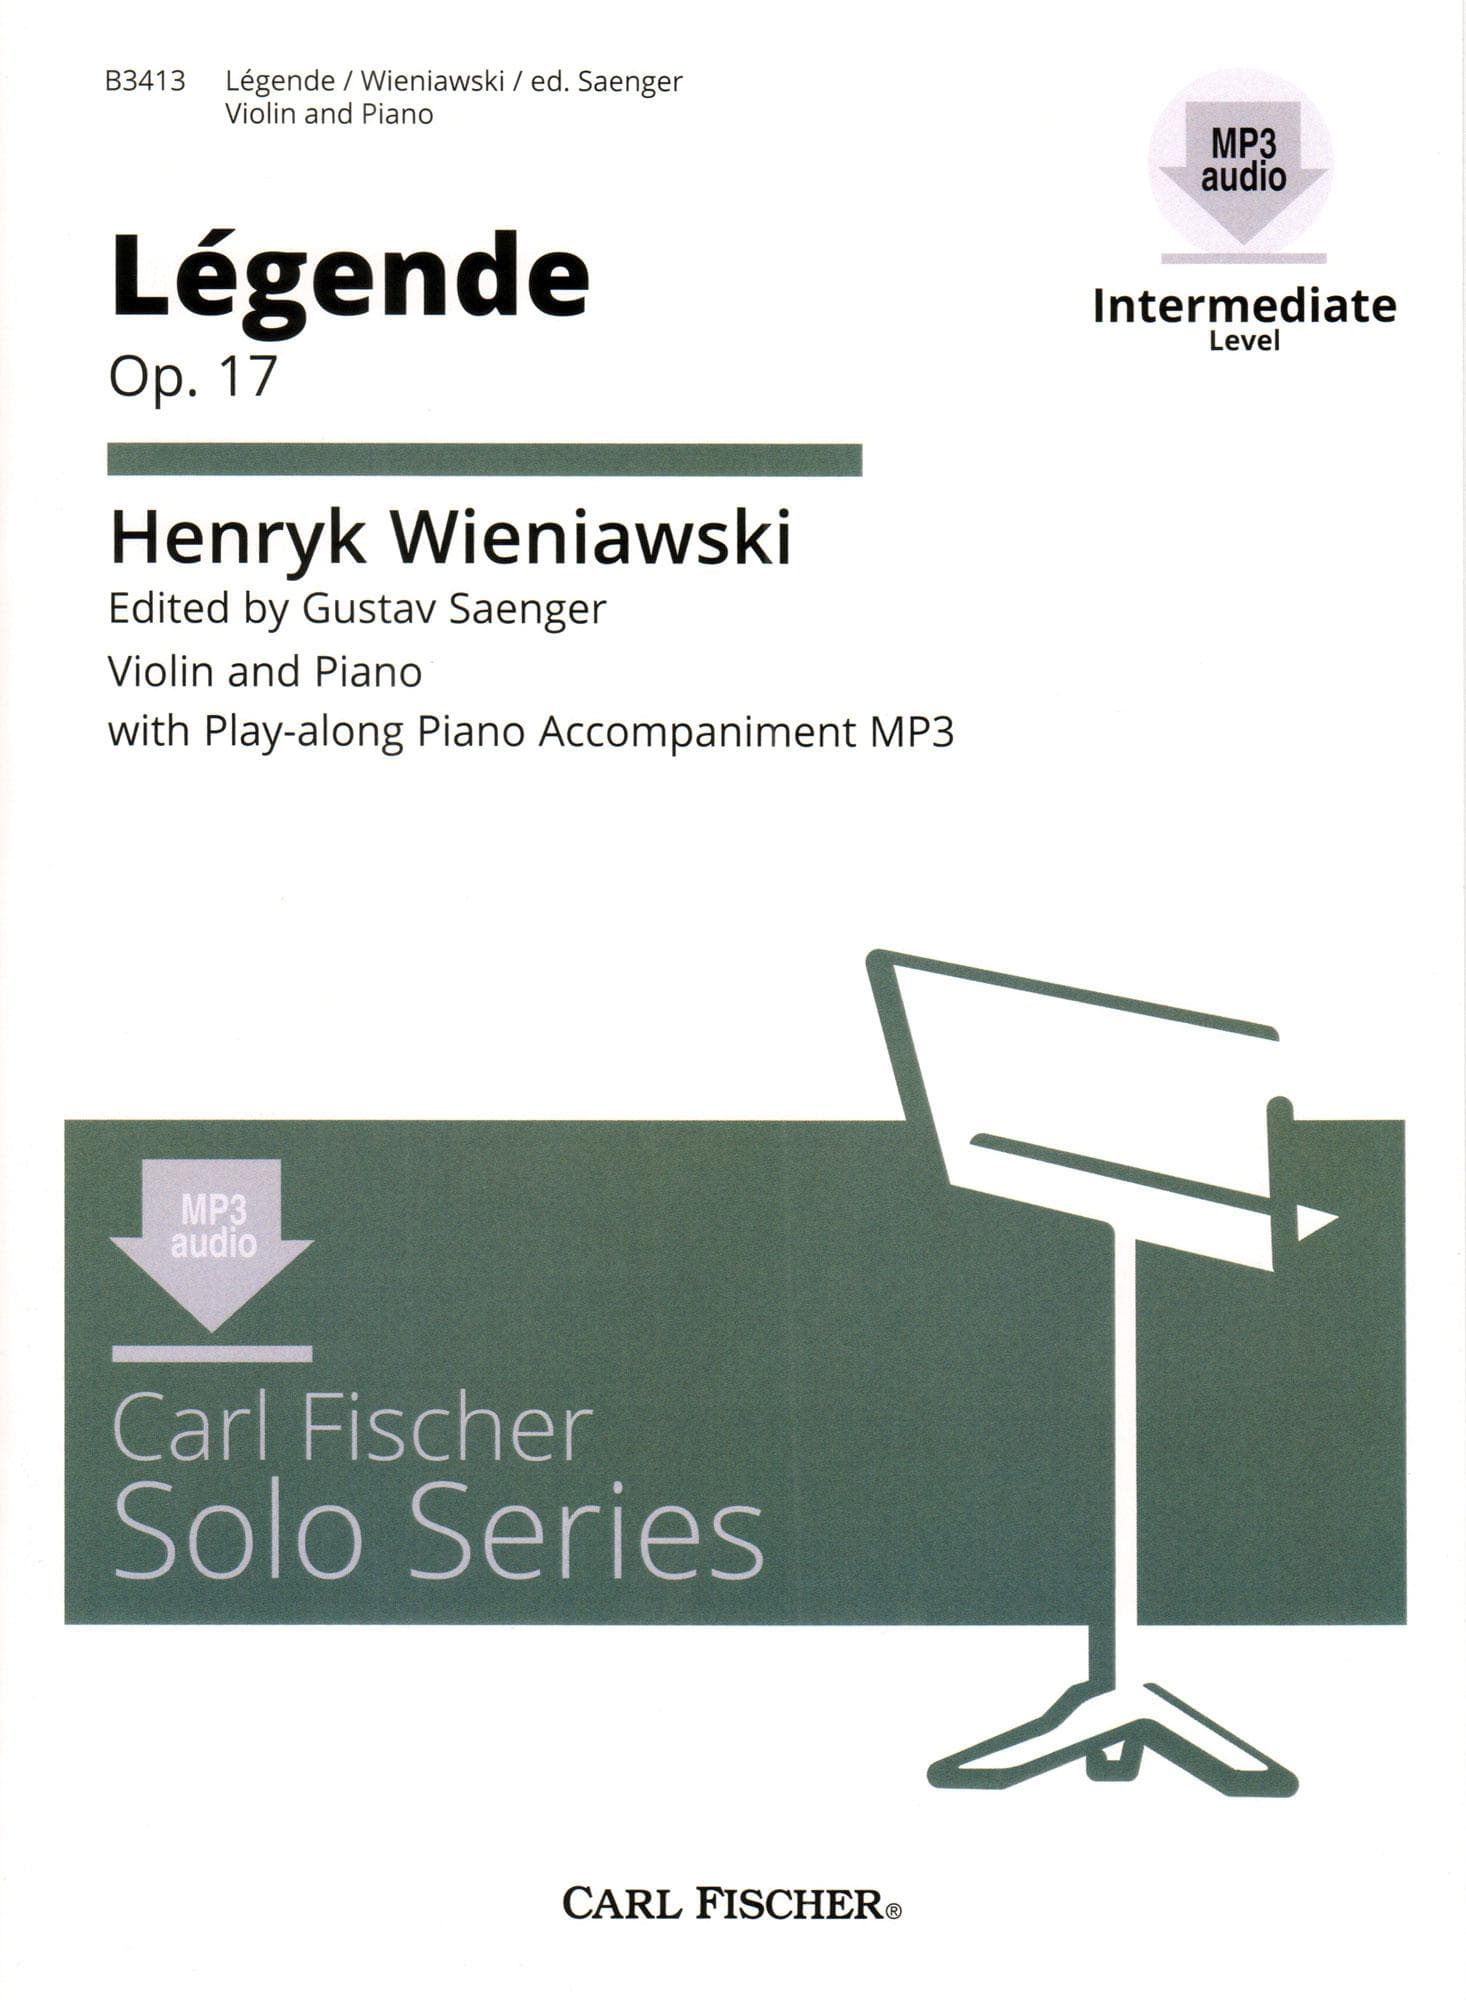 Wieniawski, Henryk - Legende, Op 17 - for Violin and Piano - edited by Saenger - Book/Online Audio - Carl Fischer